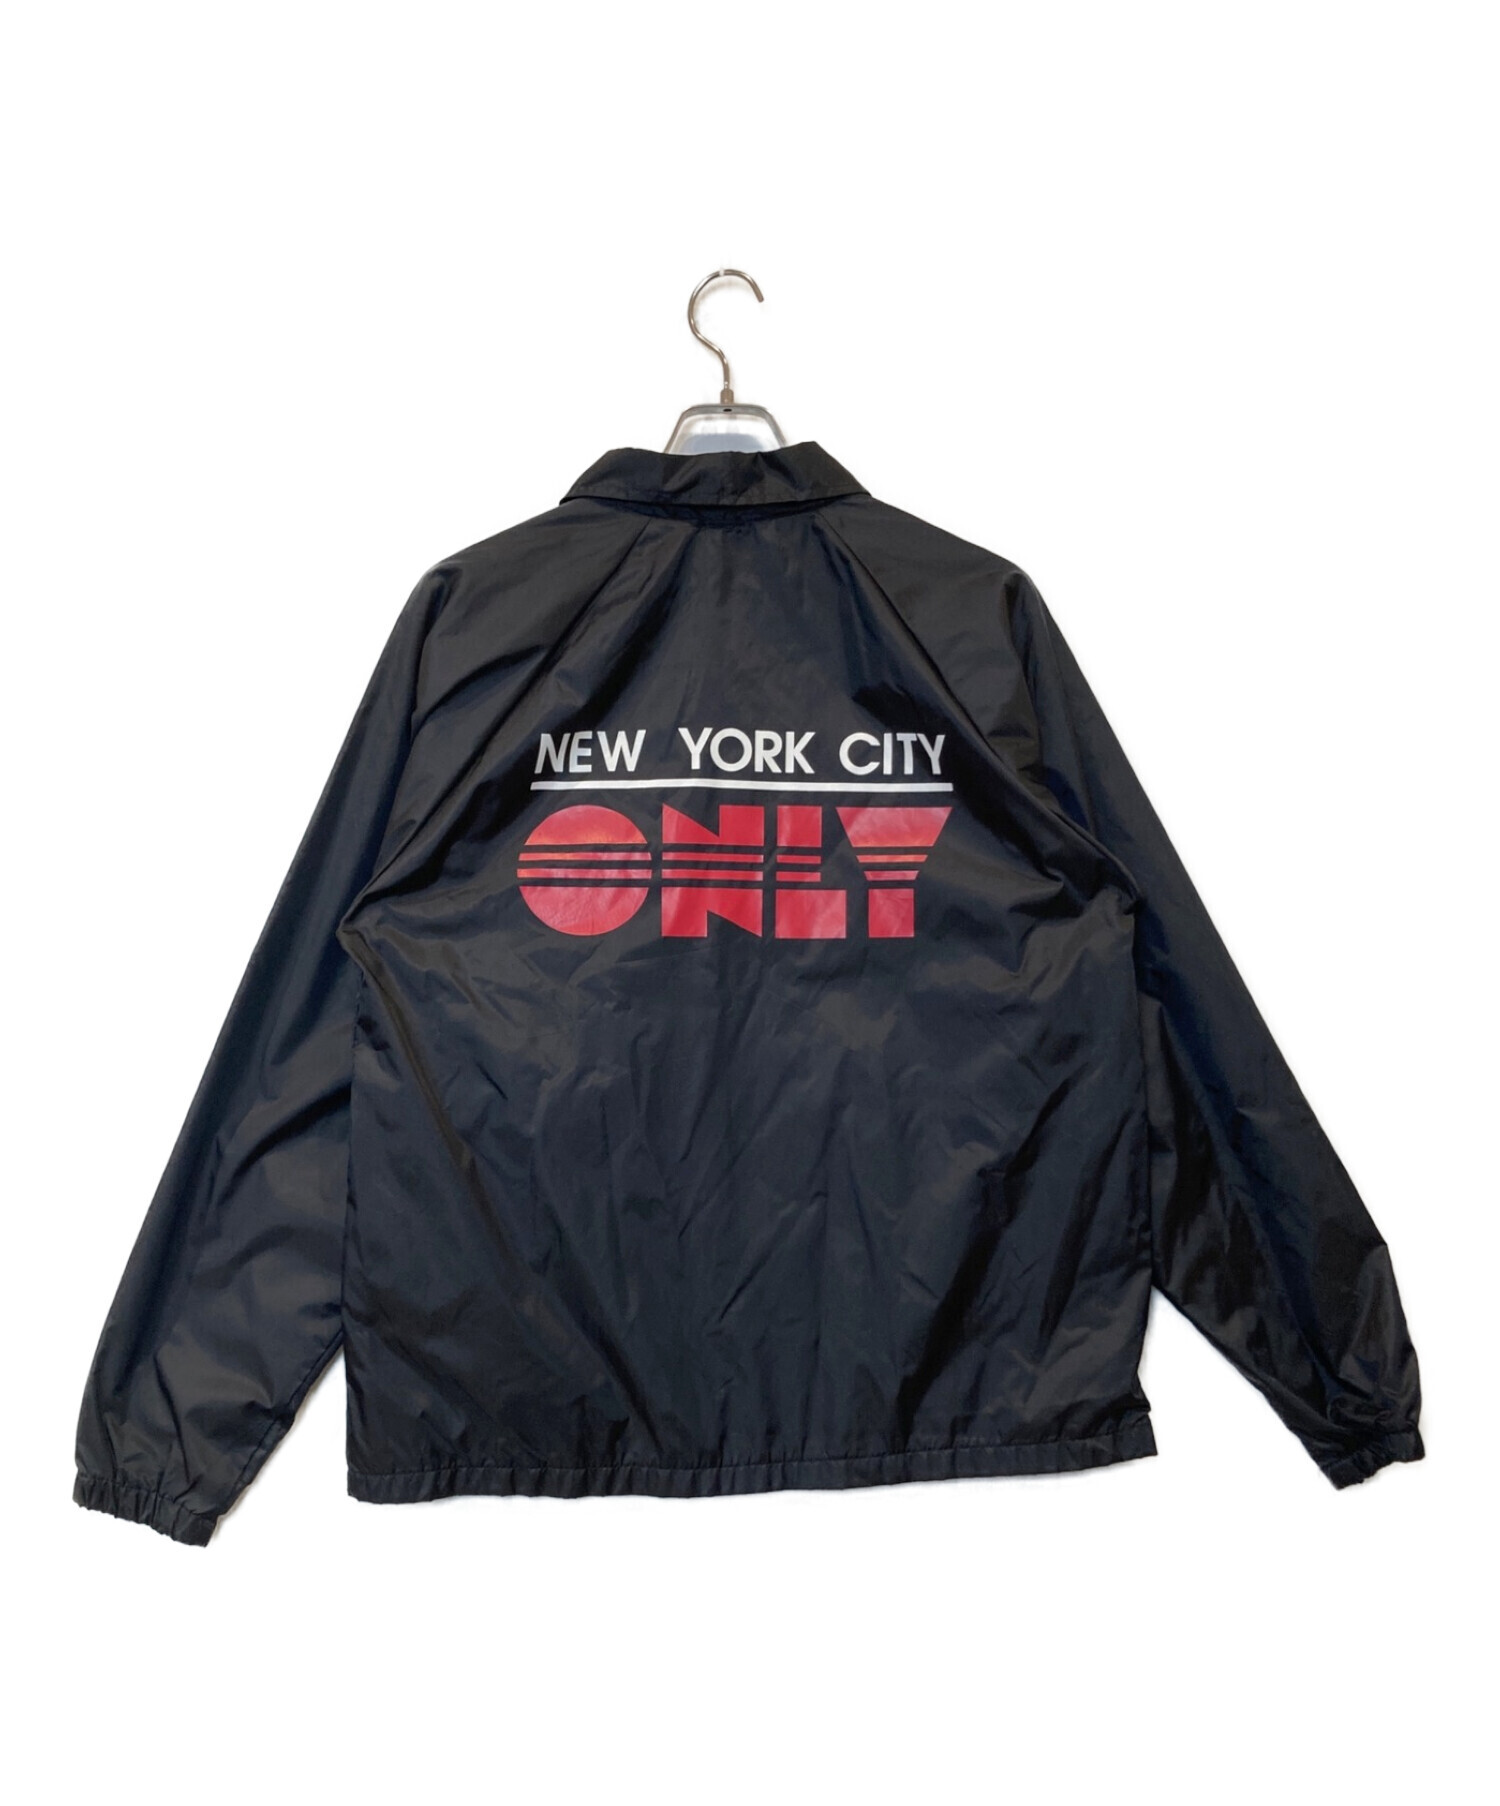 ONLY NY (オンリーニューヨーク) コーチジャケット ブラック サイズ:M